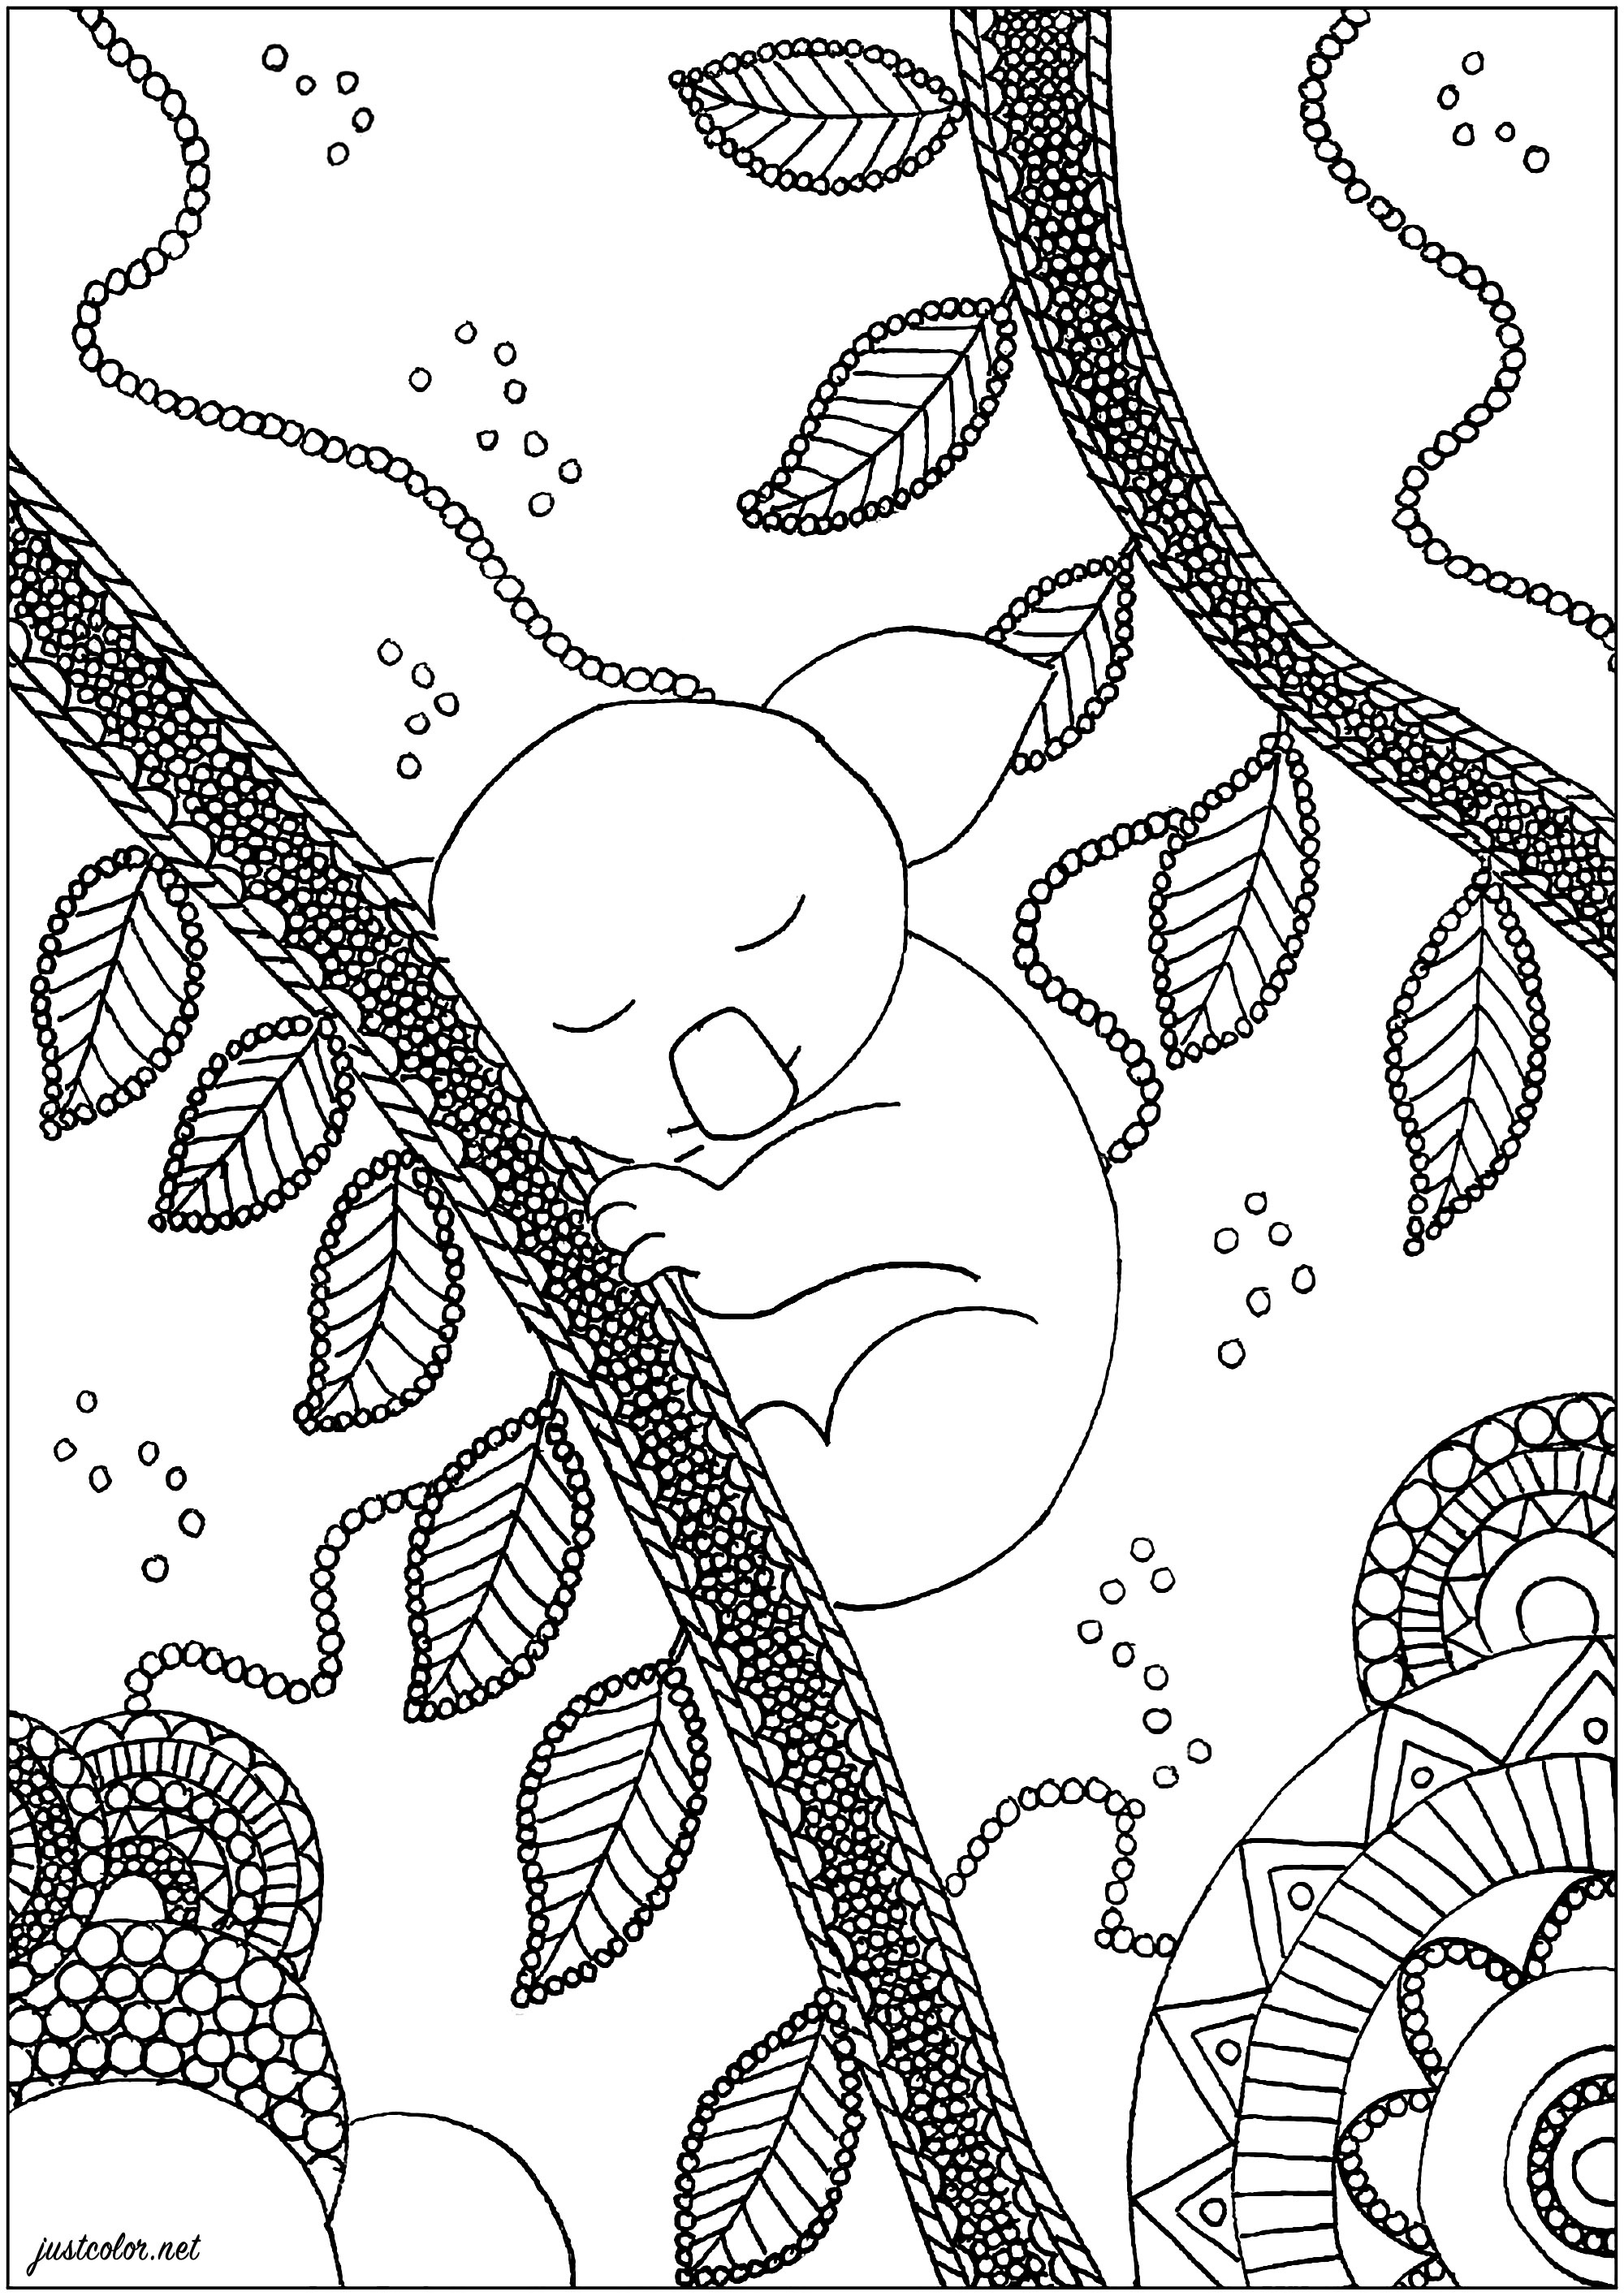 Pagina da colorare : Orsi koala - 2